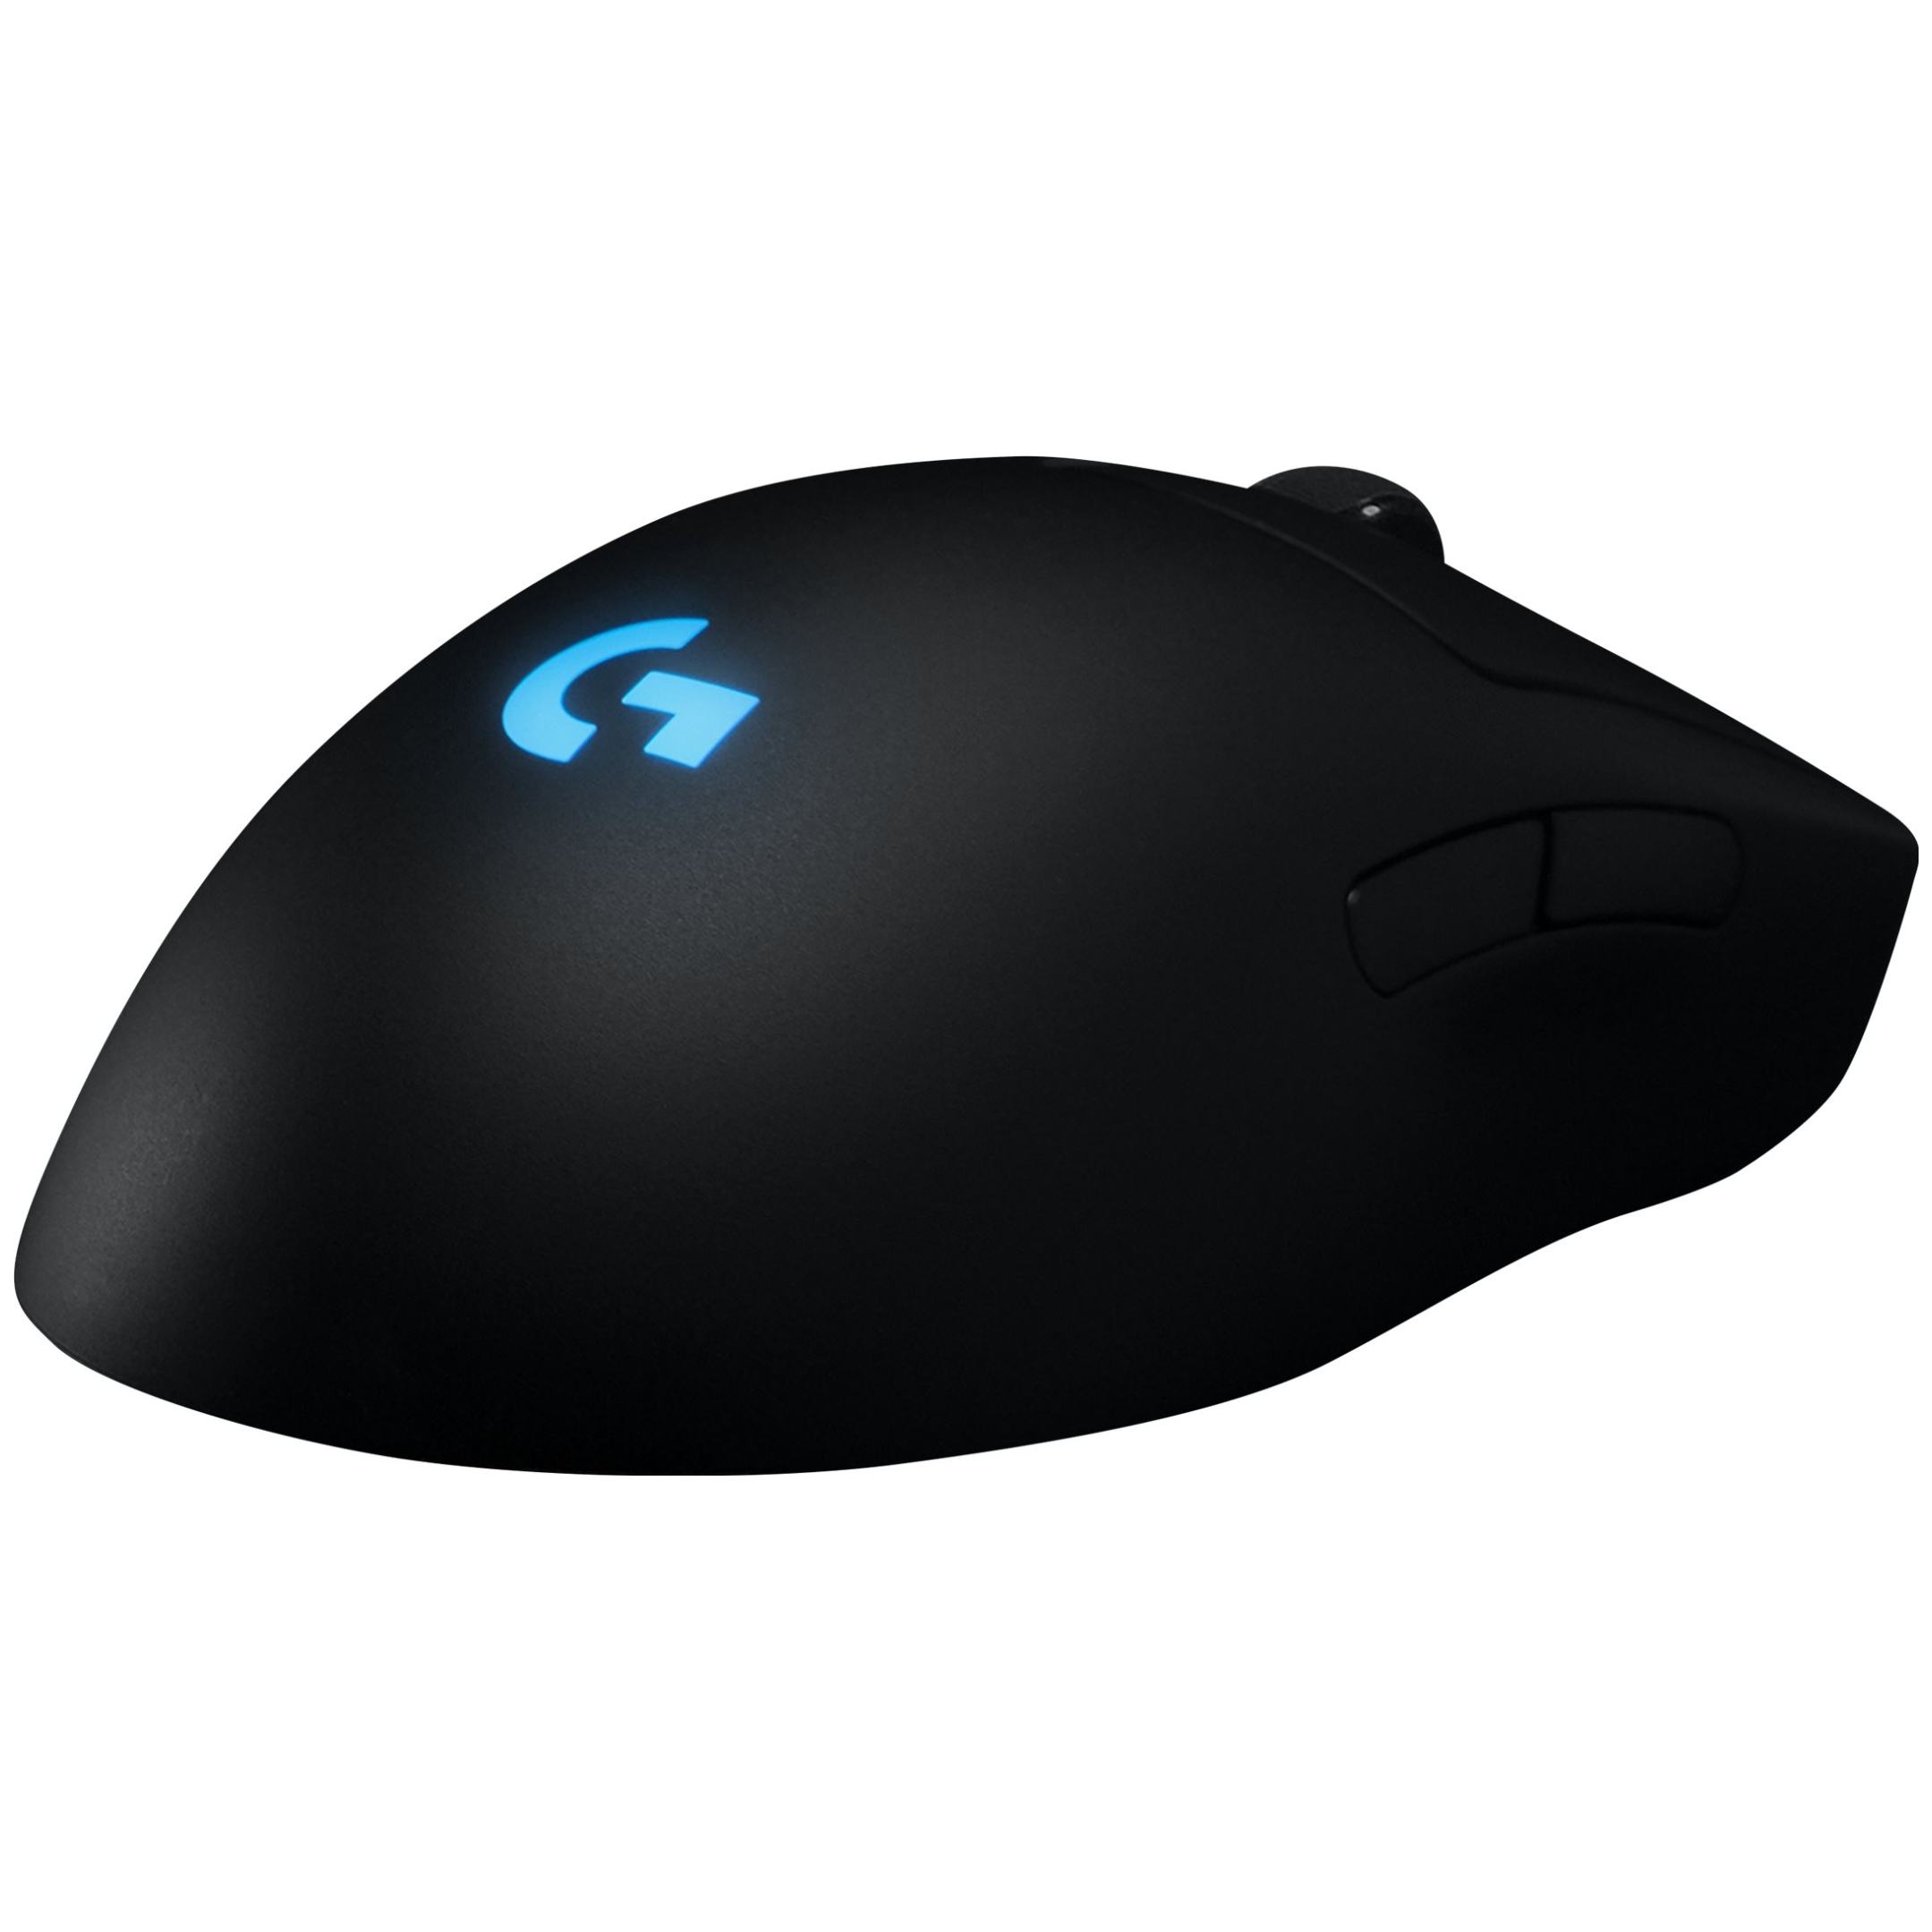 Logitech g pro mouse. Logitech g Pro Wireless Mouse. Logitech g Pro Black USB. Logitech g Pro PNG.